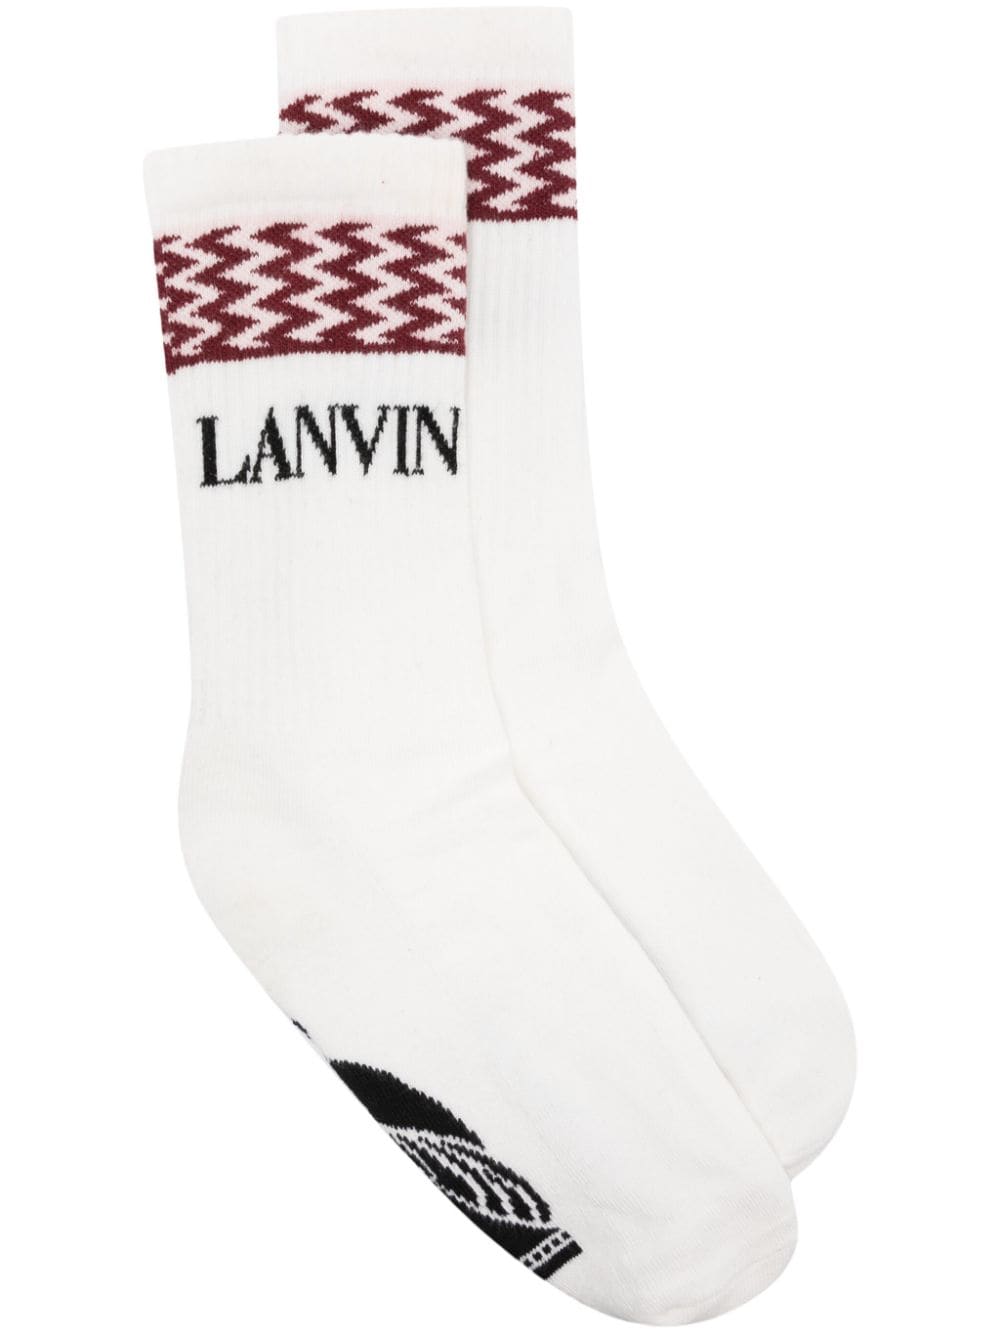 Lanvin Curb Lanvin logo socks - White von Lanvin